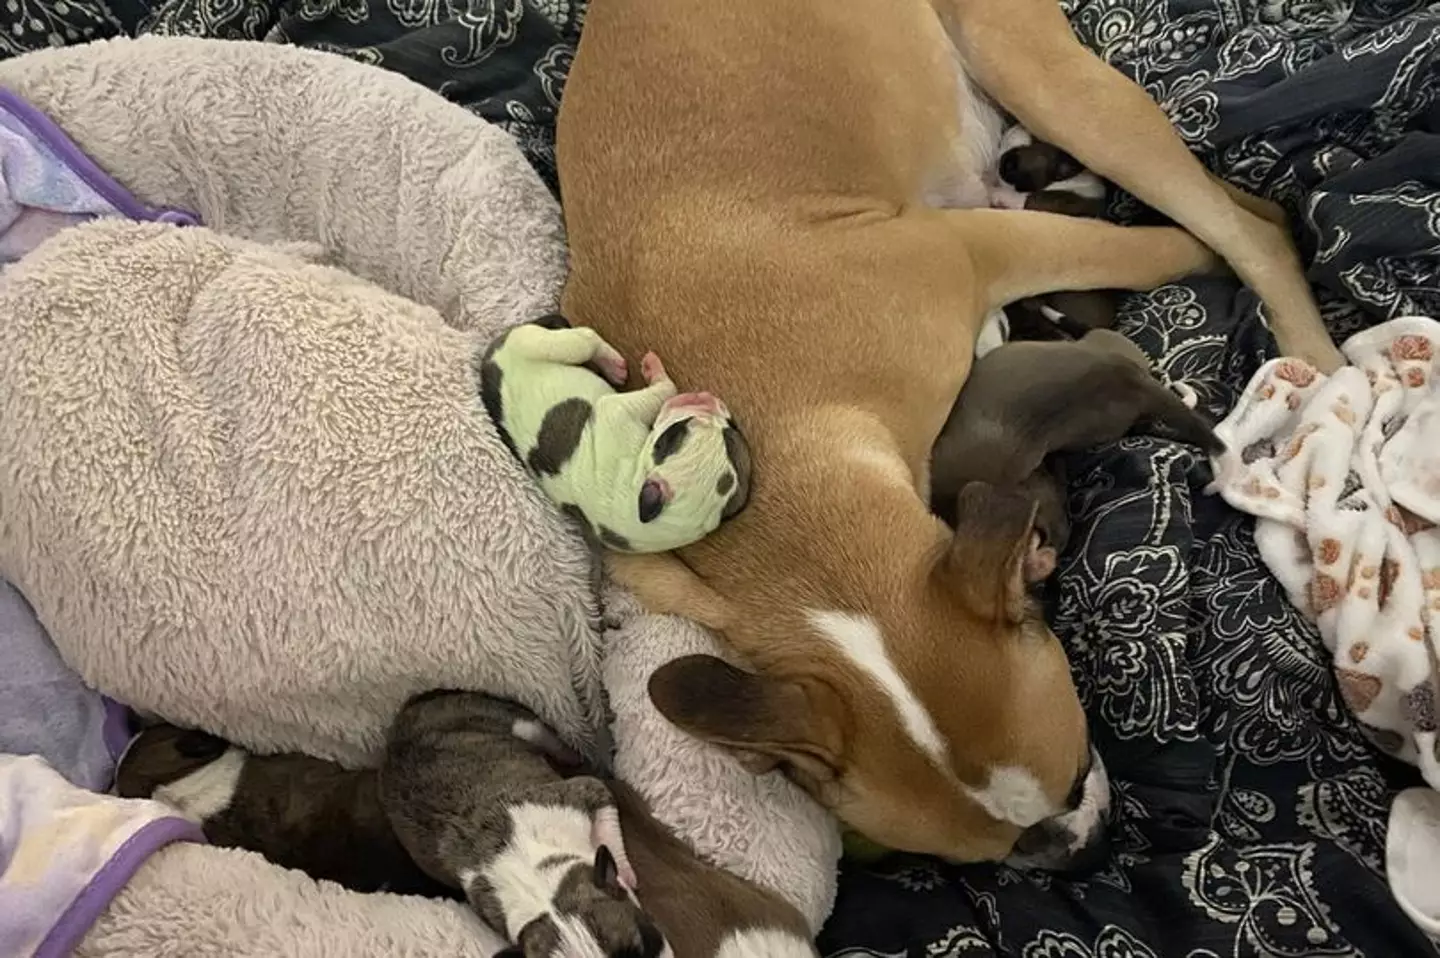 A bulldog has given birth to a green puppy (